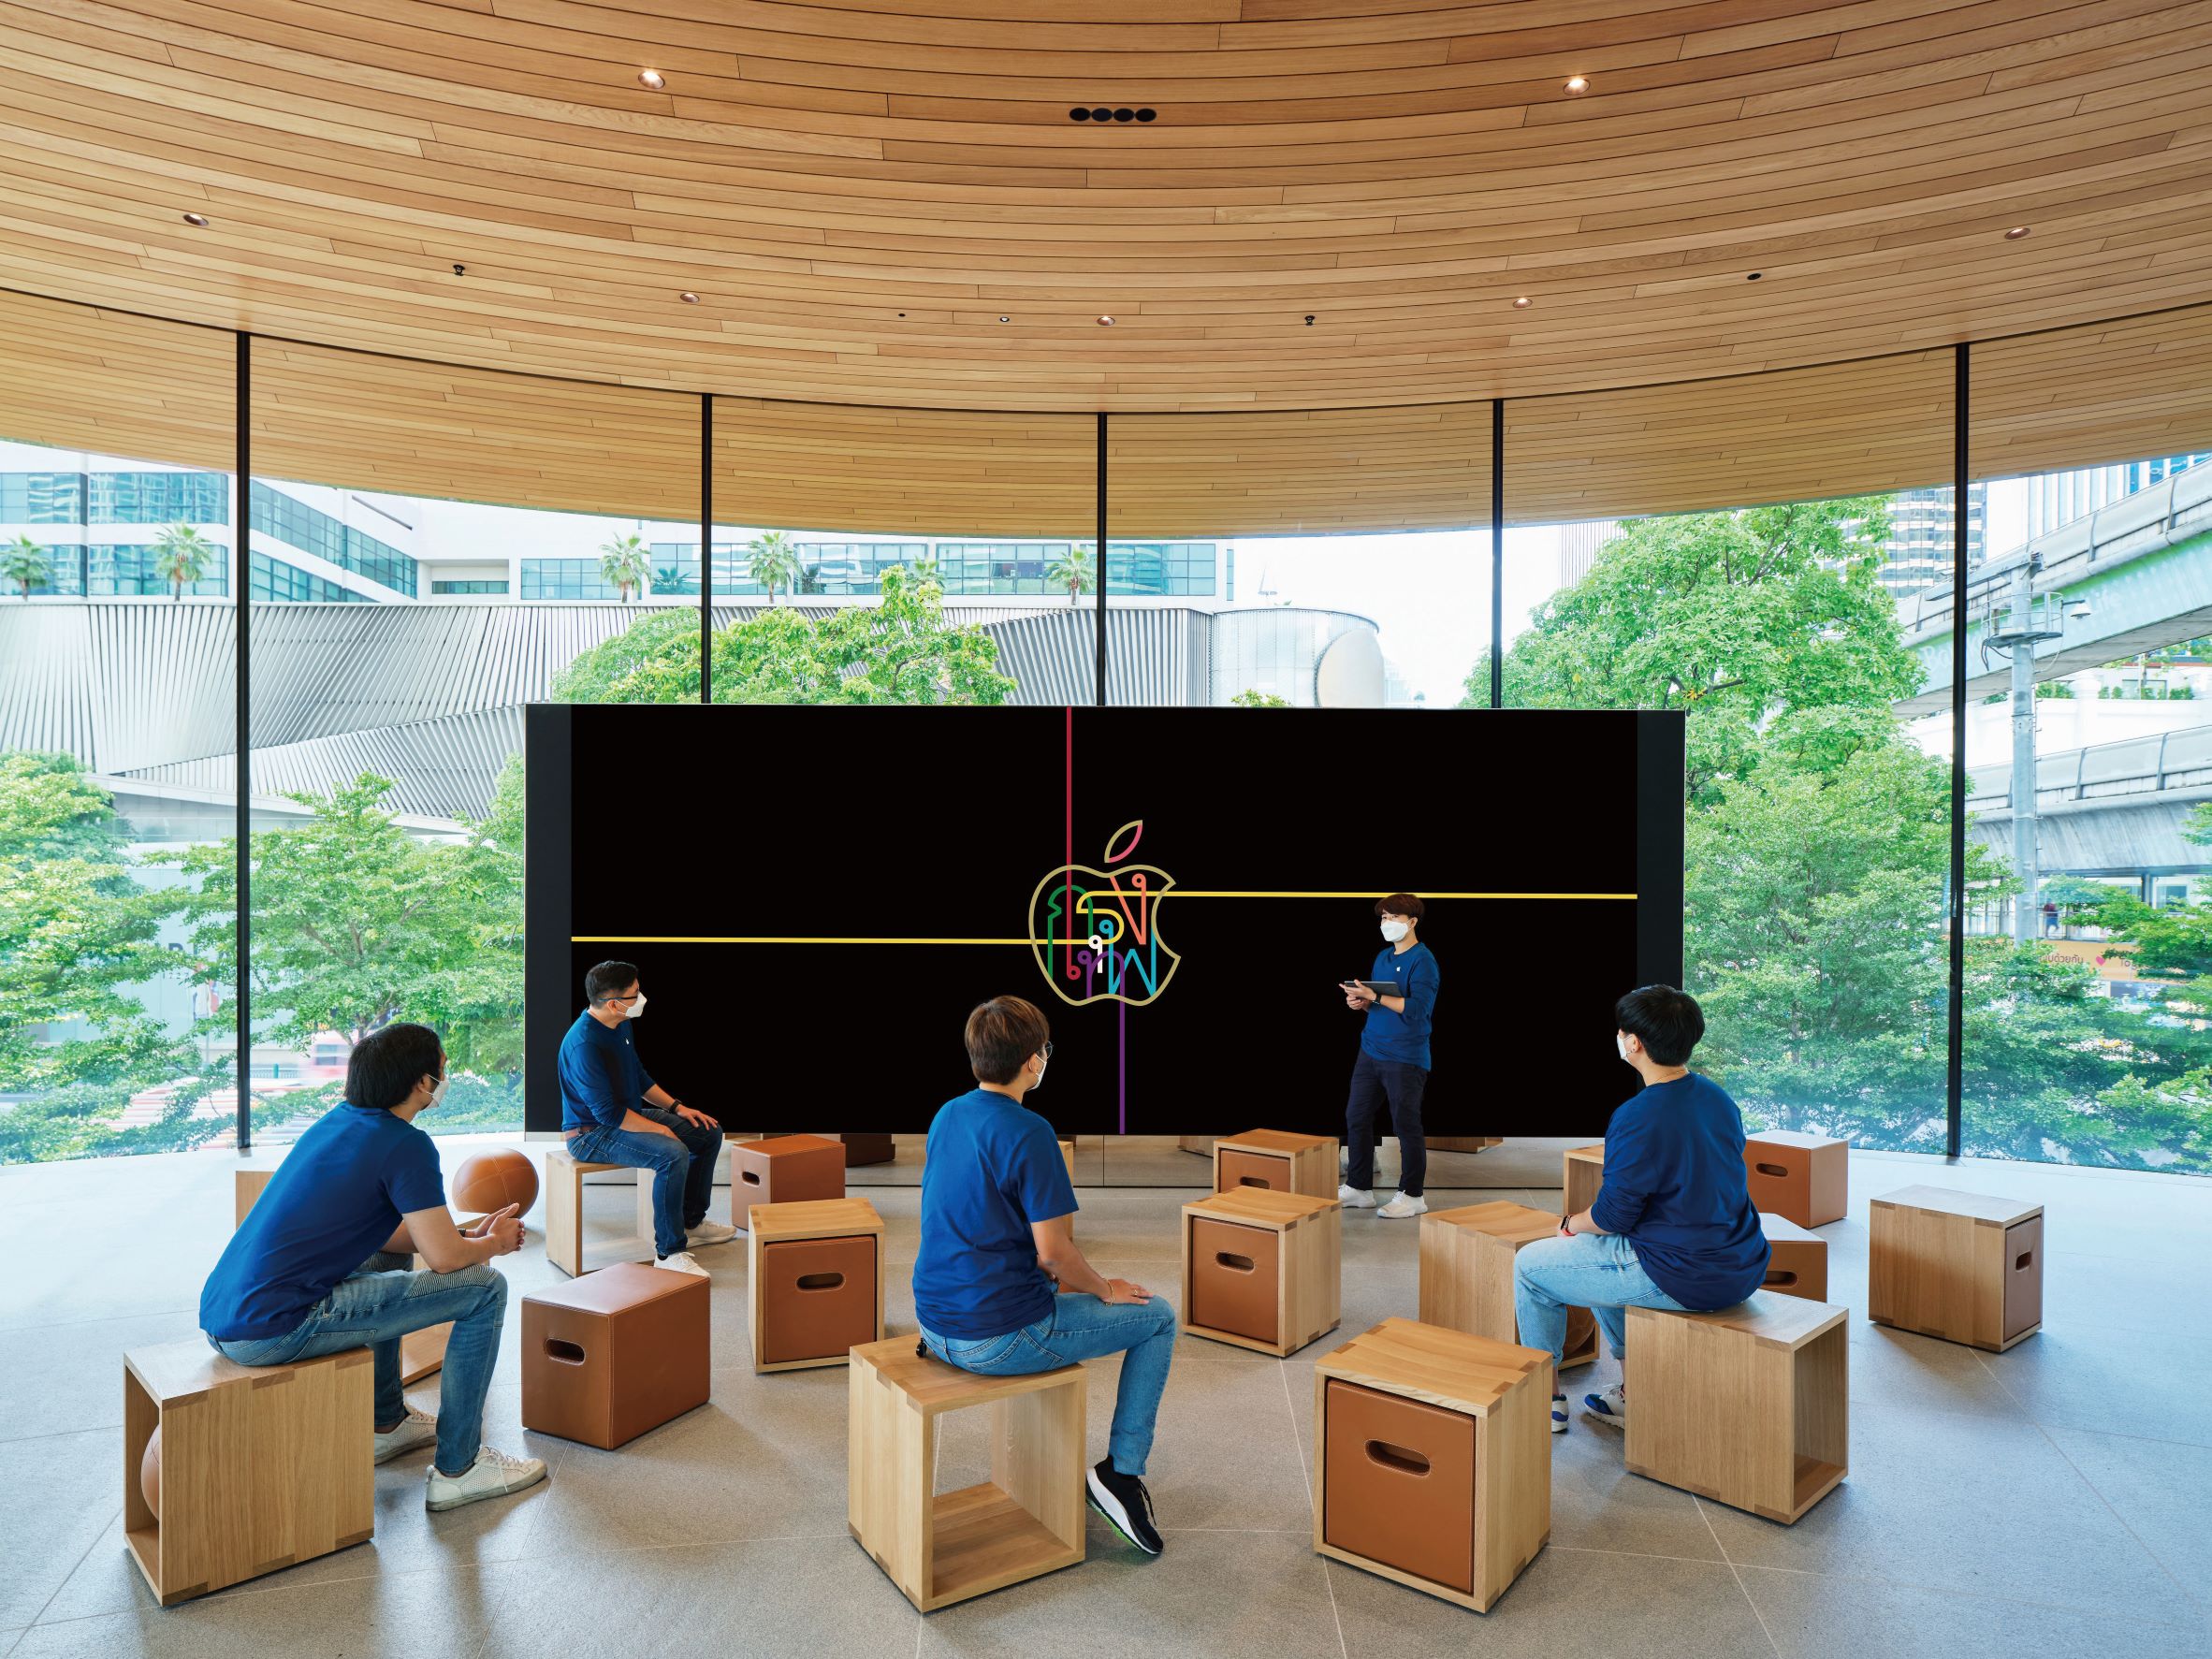 Apple Central World 也規劃有可靈活利用的論壇空間，並使用可自由移動的木箱式座椅，來與建築的木質感相配搭。